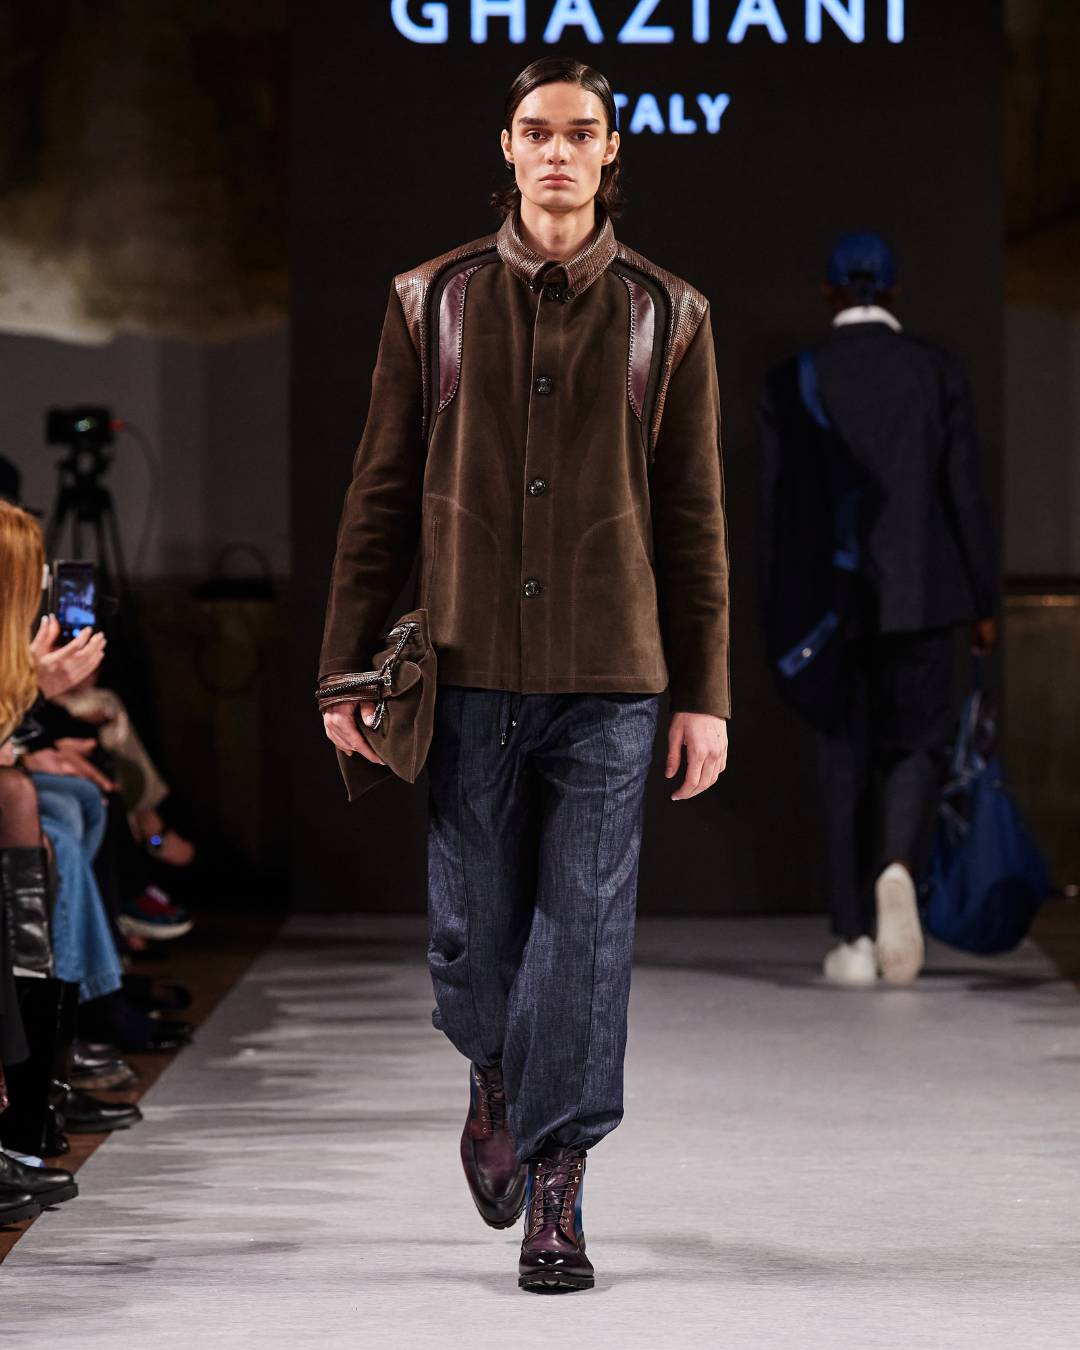 A man wearing a brown leather jacket. He is wearing denim jeans.